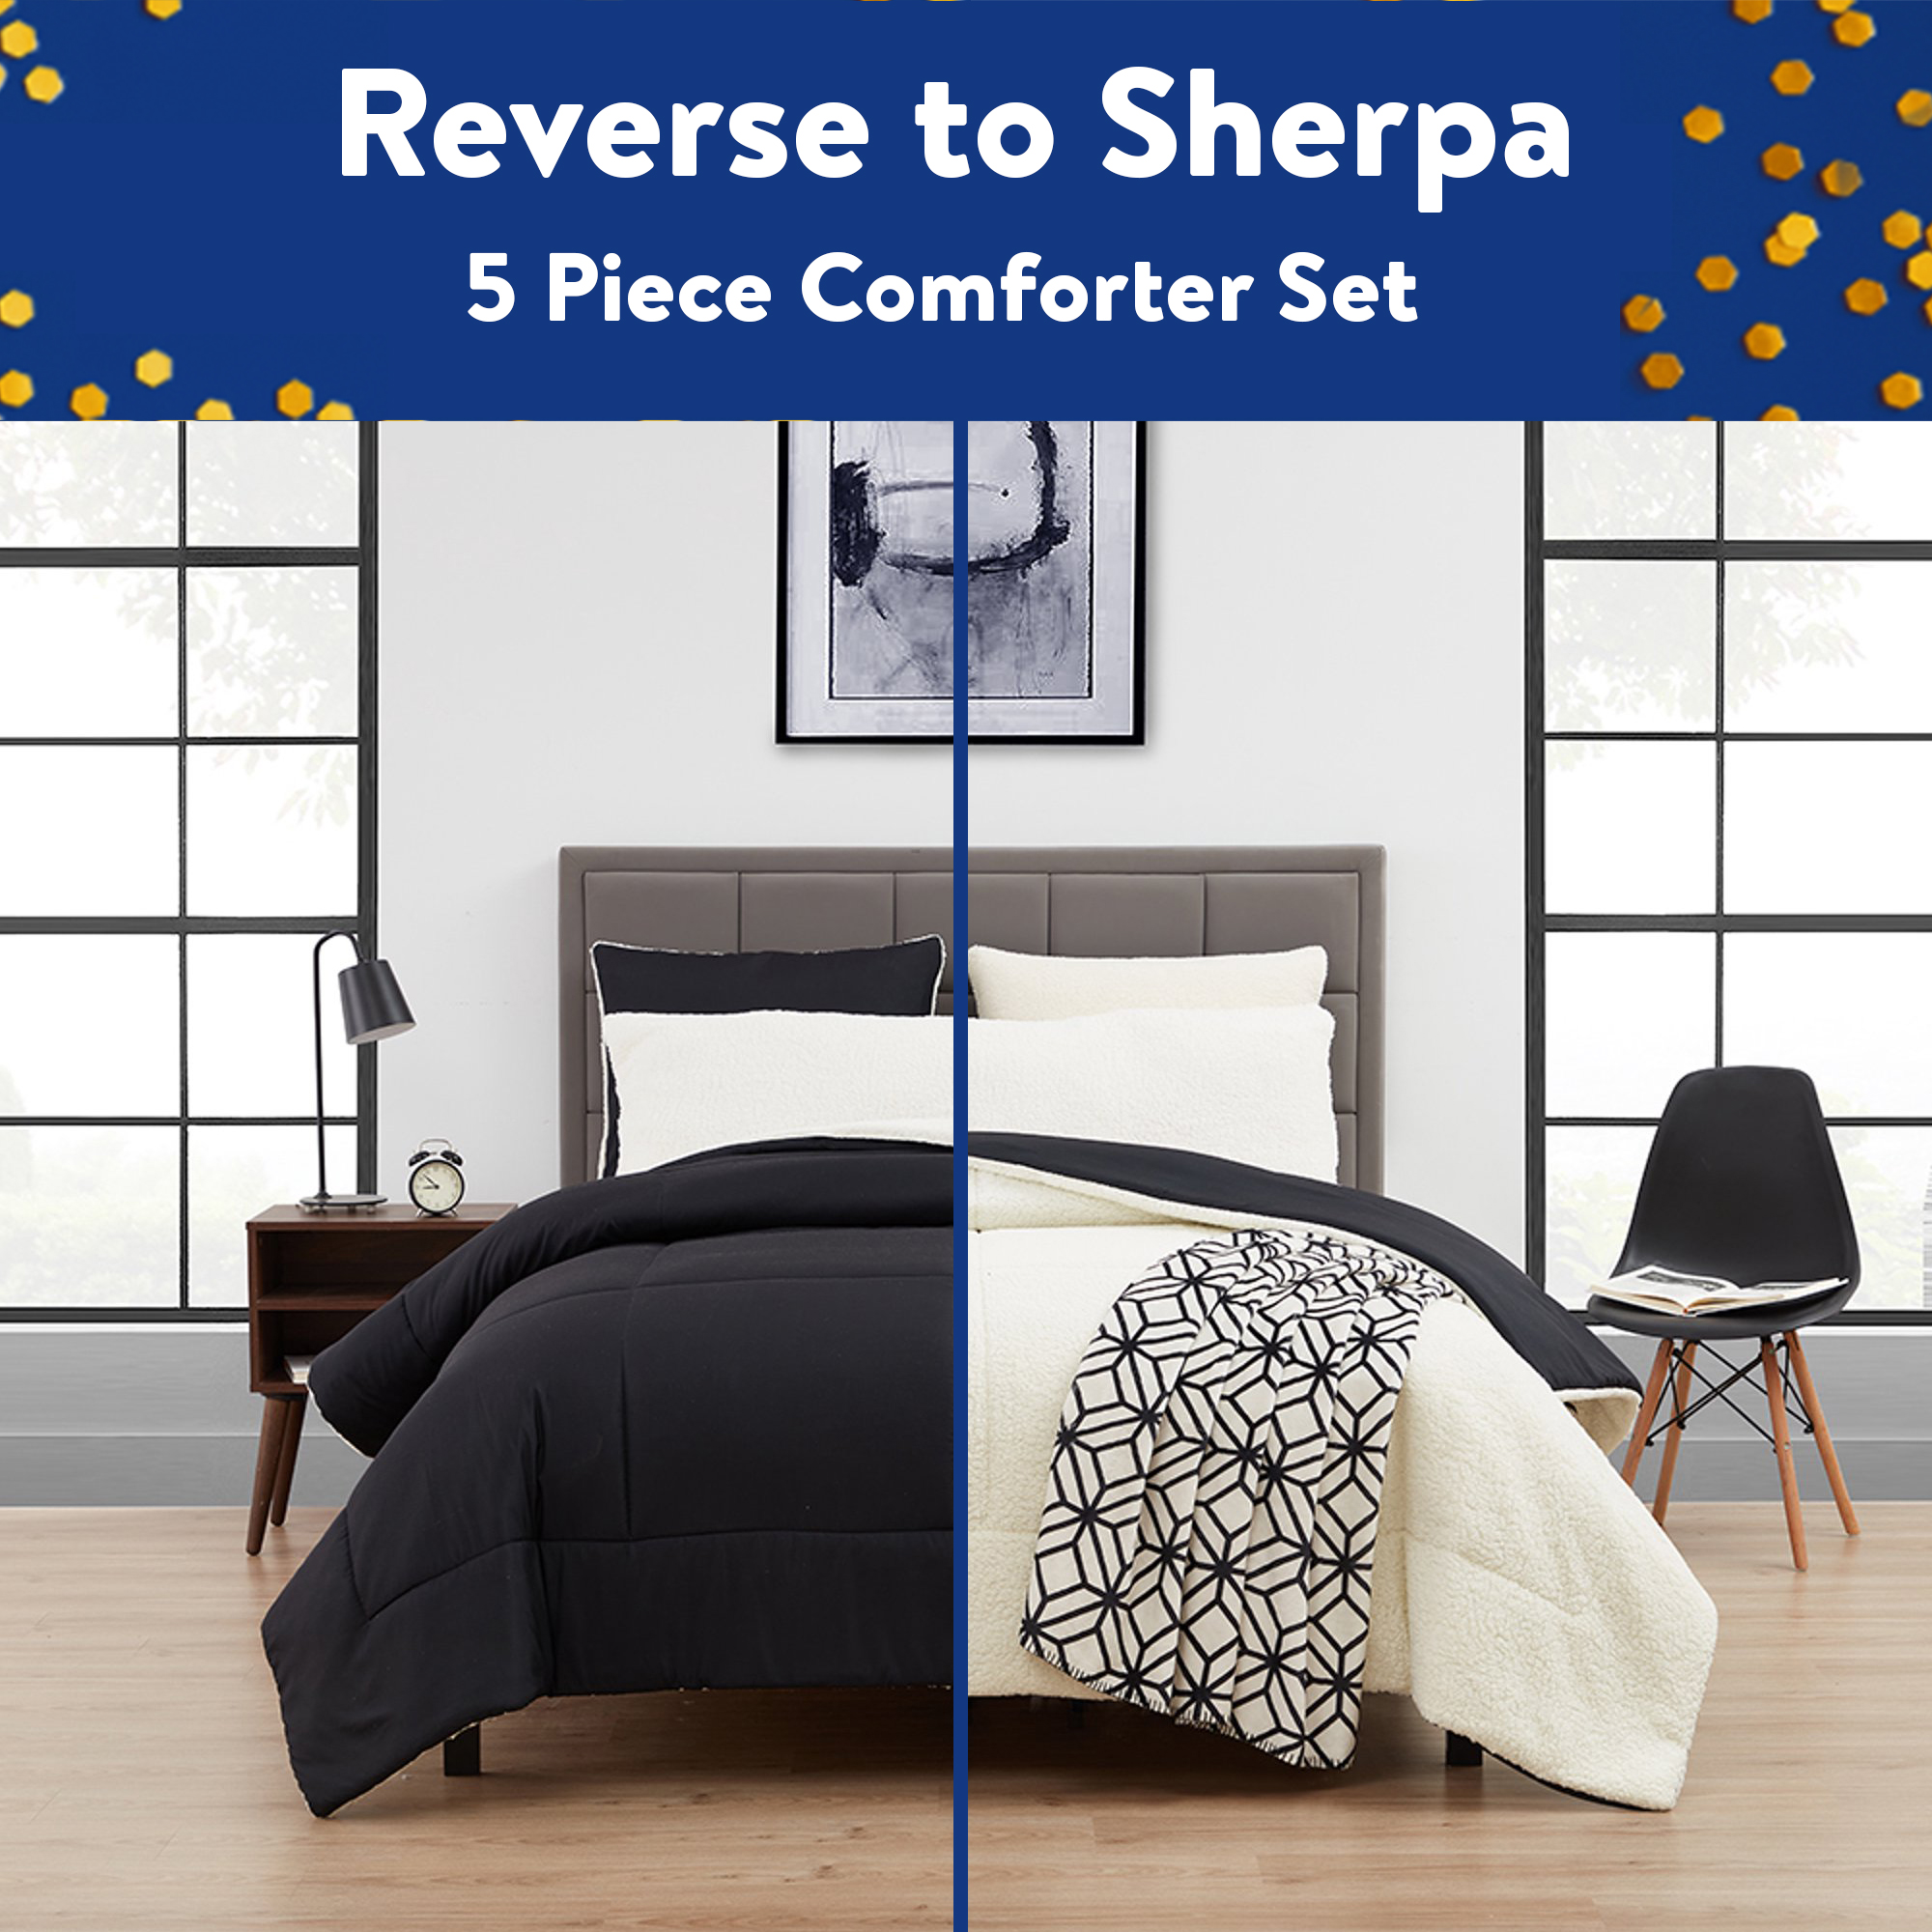 Serta So Cozy 5-Piece Sherpa Reverse Comforter Set, Rich Black, Full/Queen - image 6 of 10